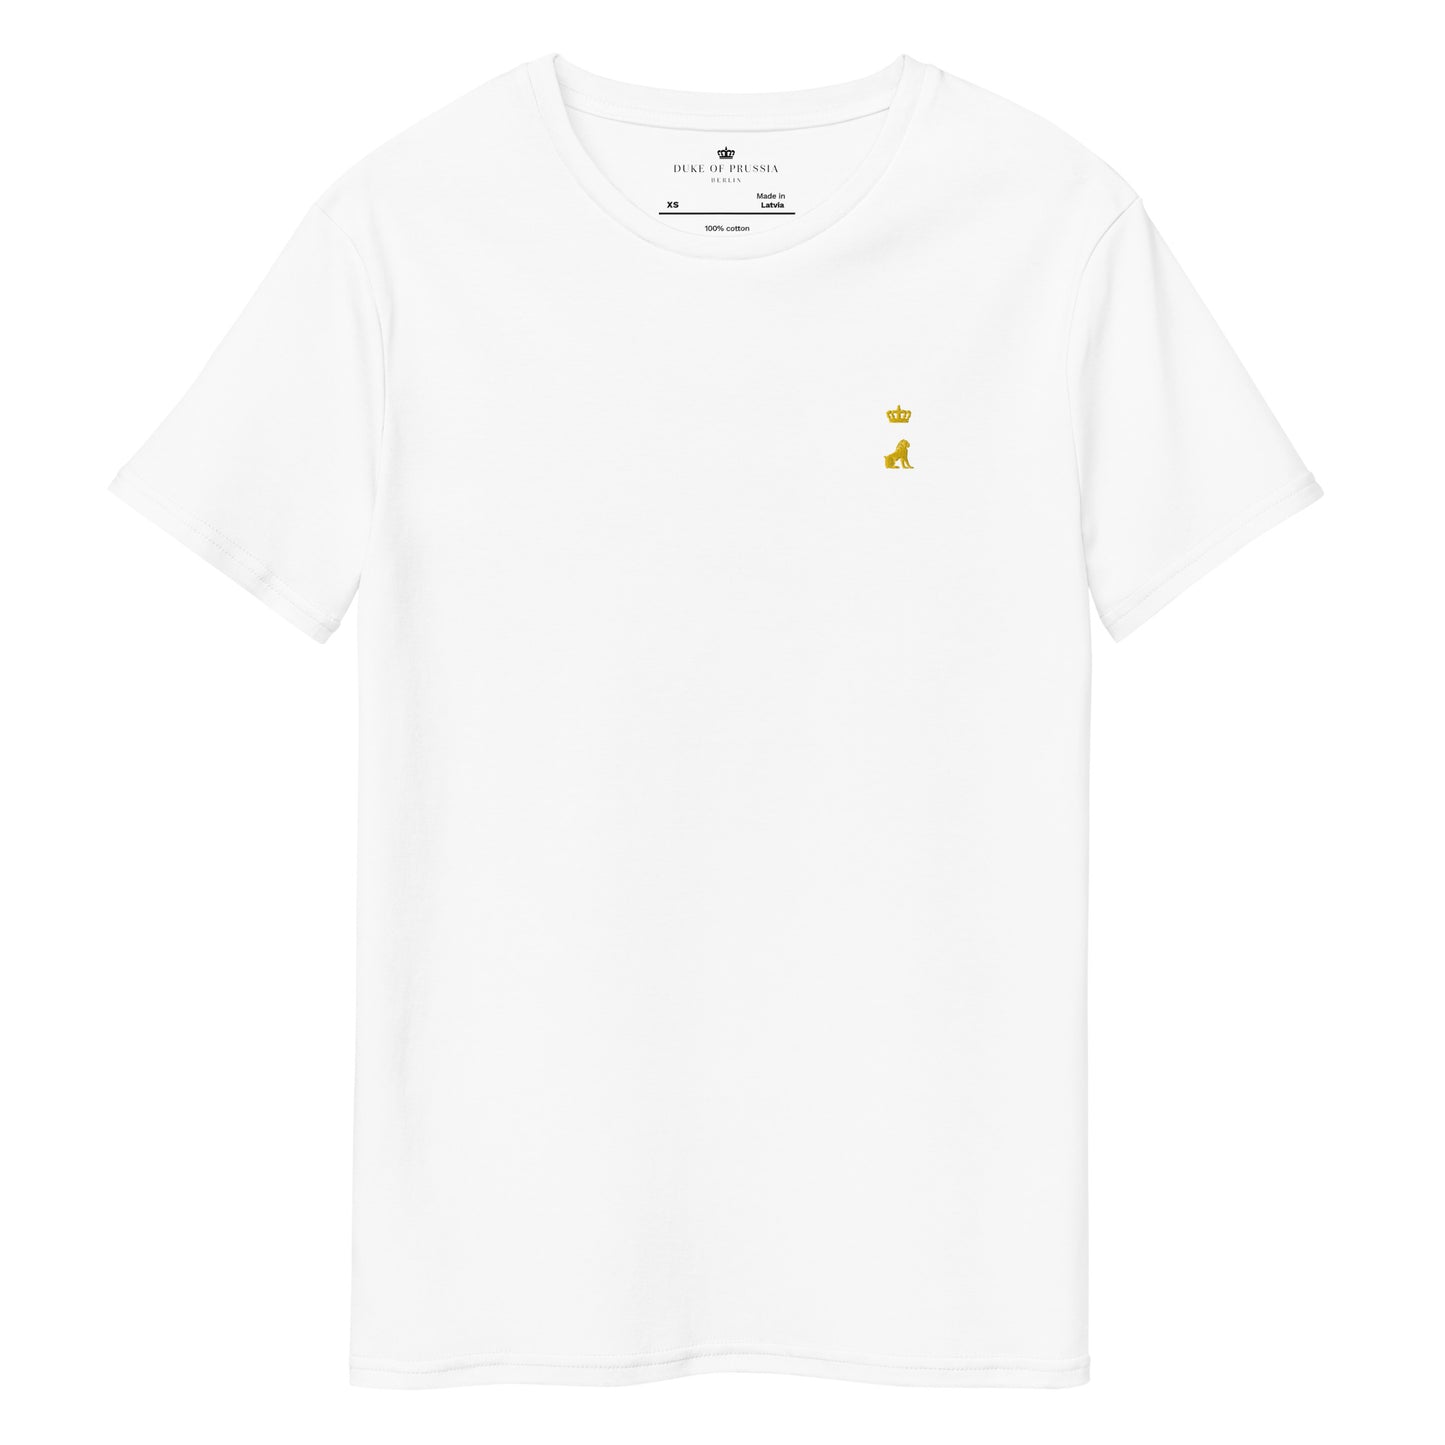 Queen Luise Edition premium cotton t-shirt (men | embroidered)